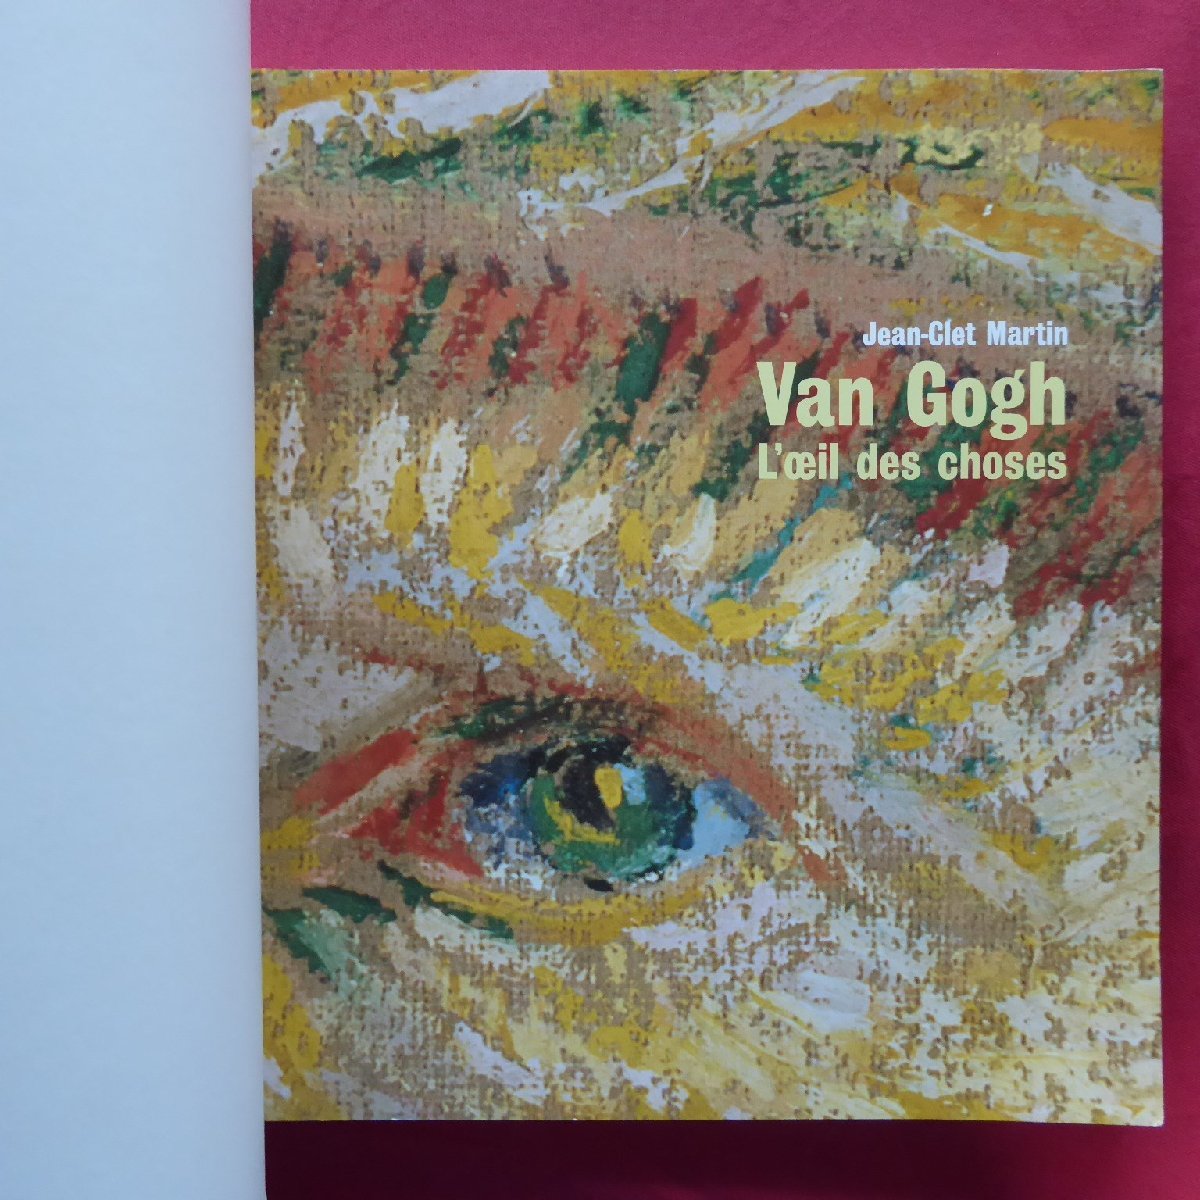 z65/洋書【ヴァン・ゴッホ-物事の目：Van Gogh. L'oeil des choses/Jean-Clet Martin/1998年】_画像5